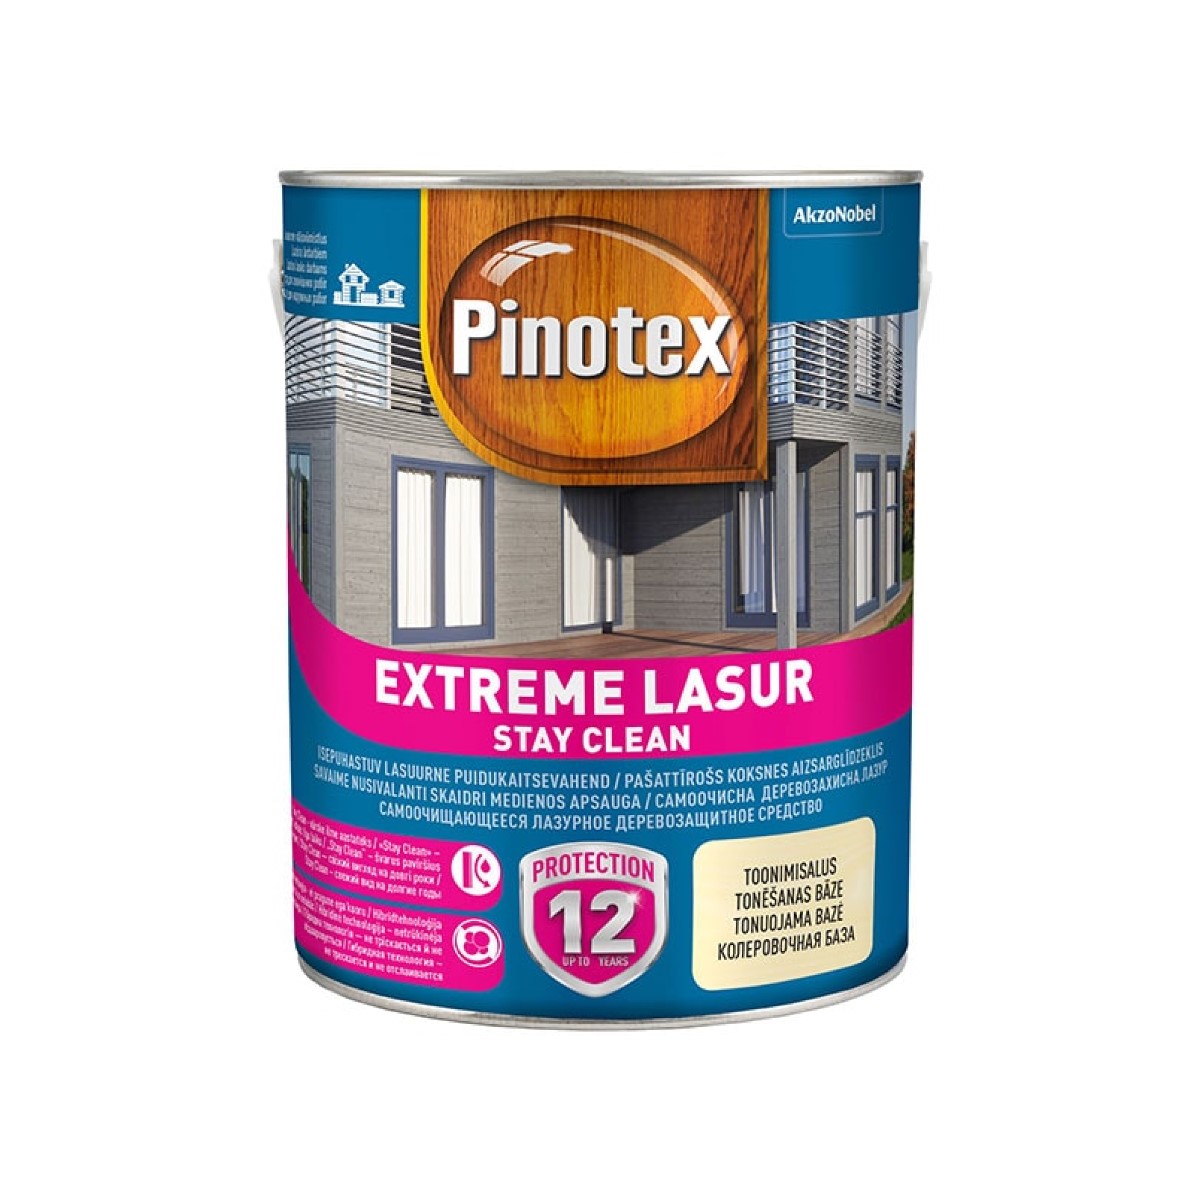 PINOTEX Extreme Lasur - tīkkoks 3l